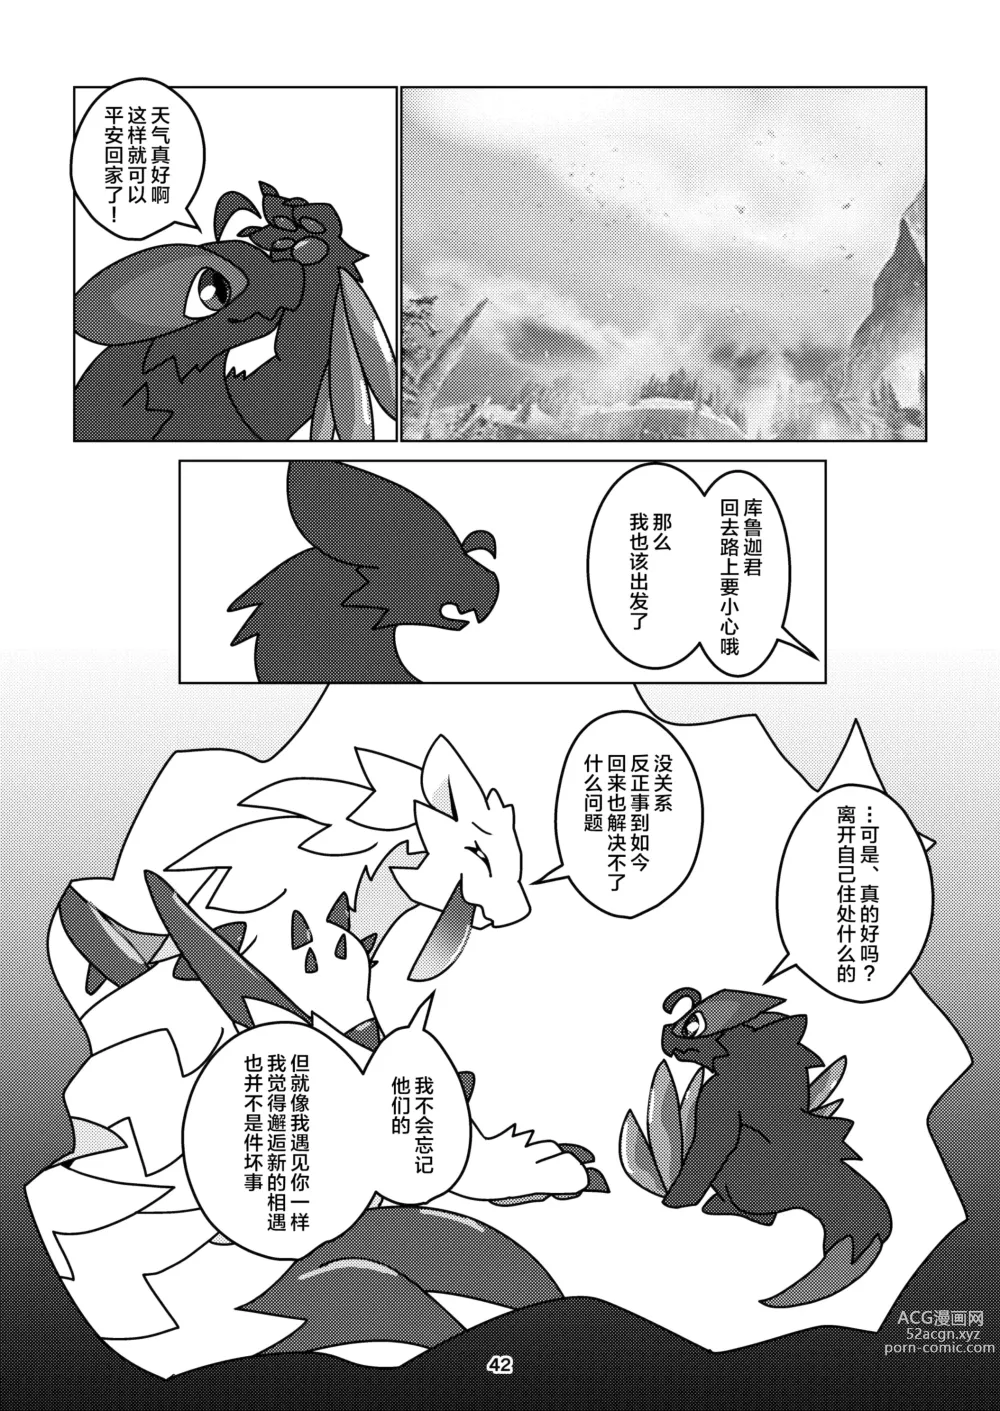 Page 43 of doujinshi 冰牙龙的洞穴